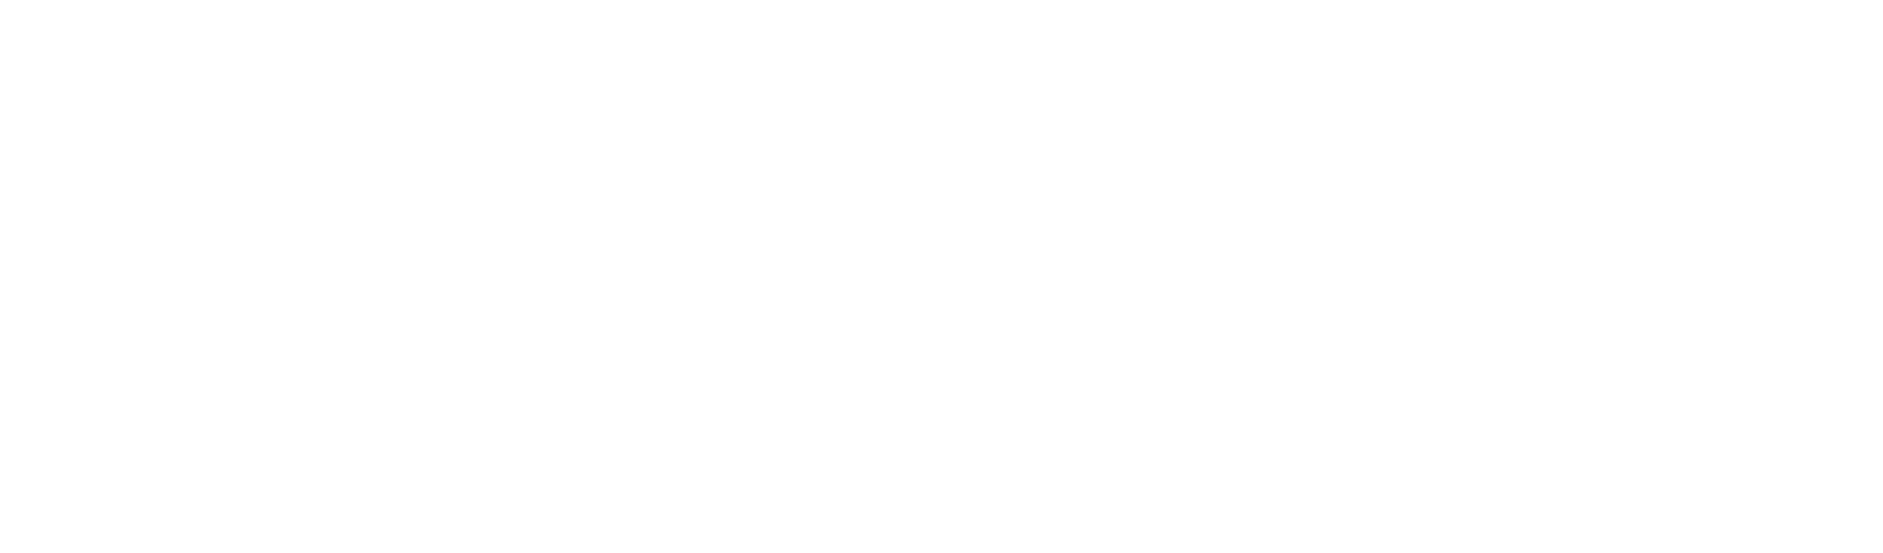 welstone-footer-logo